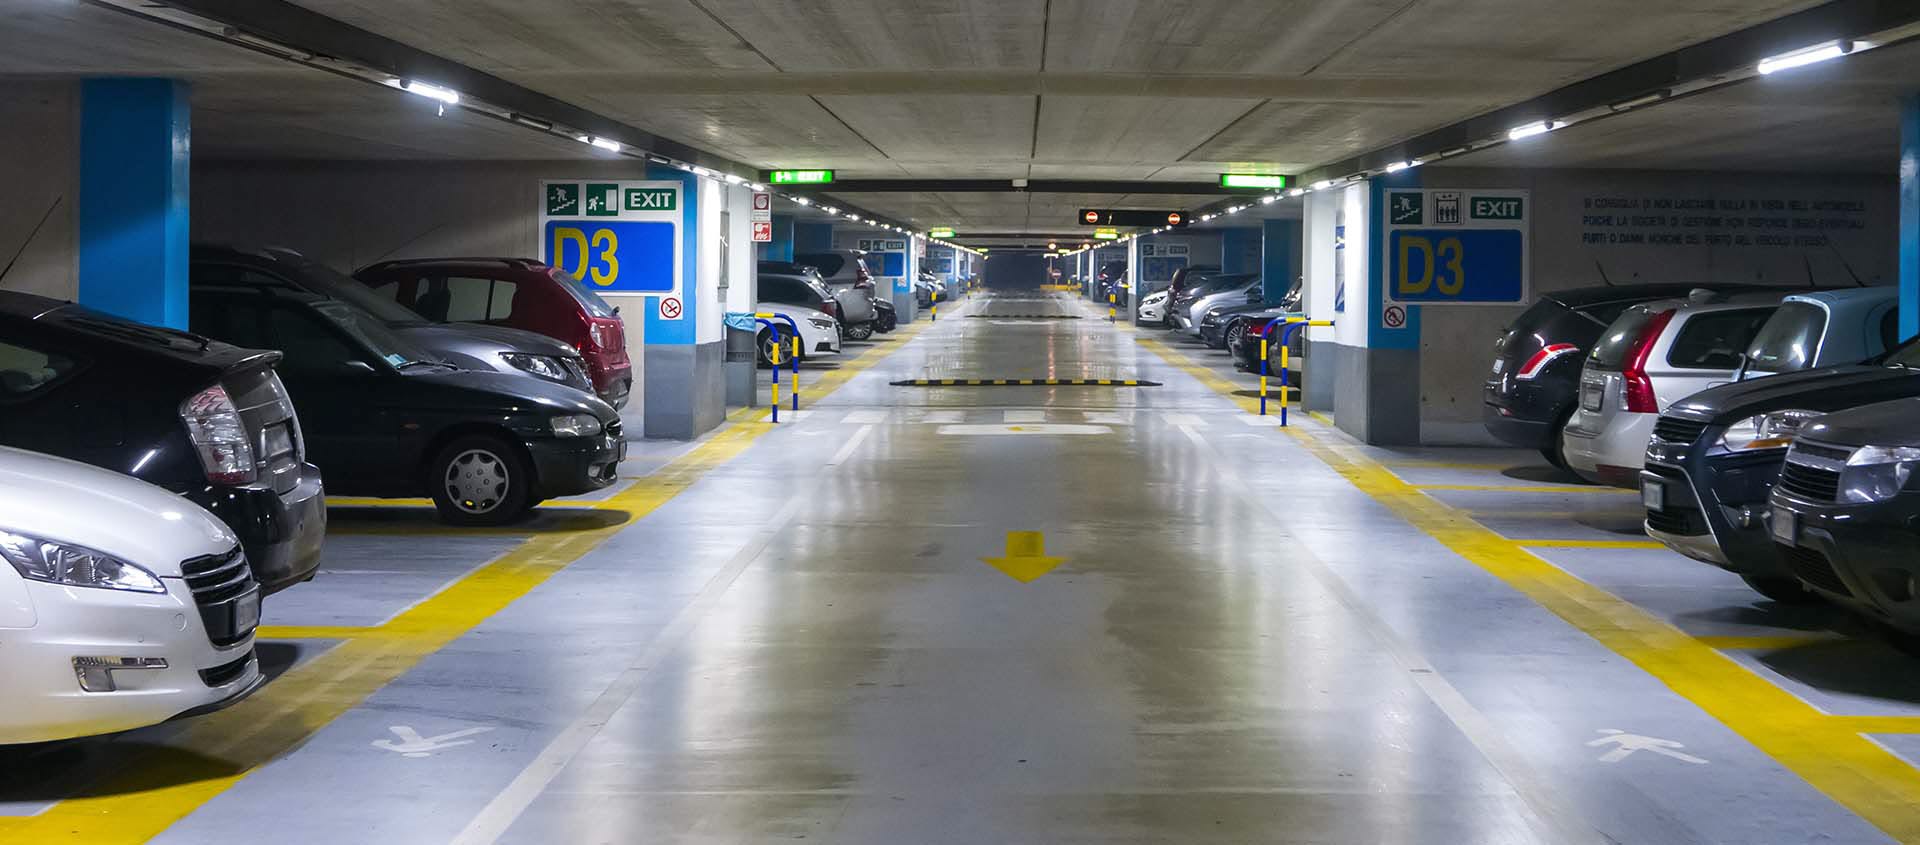 Cars parked in clean parking garage